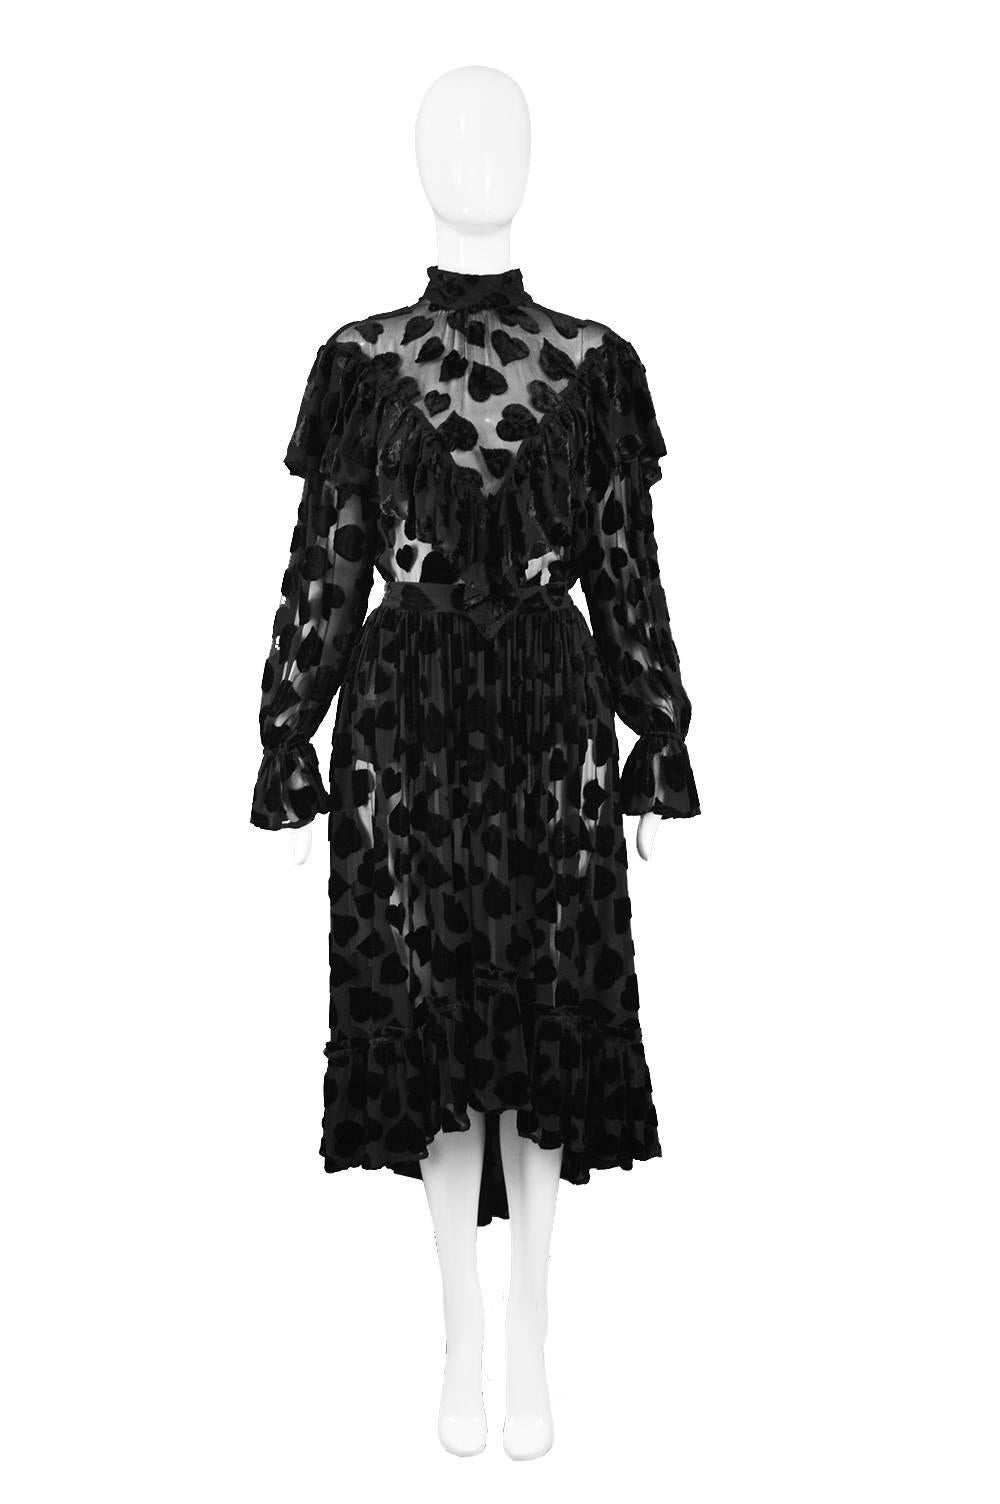 Jil Sander Vintage 1990s Semi Sheer Black Velvet Devore Two Piece Skirt Suit

Estimated Size: UK 10/ US 6/ EU 38. Please check measurements. 
Top
Bust - 38” / 96cm (has a loose flowy fit)
Length (Shoulder to Hem) - 23” / 58cm
Shoulder to Shoulder -